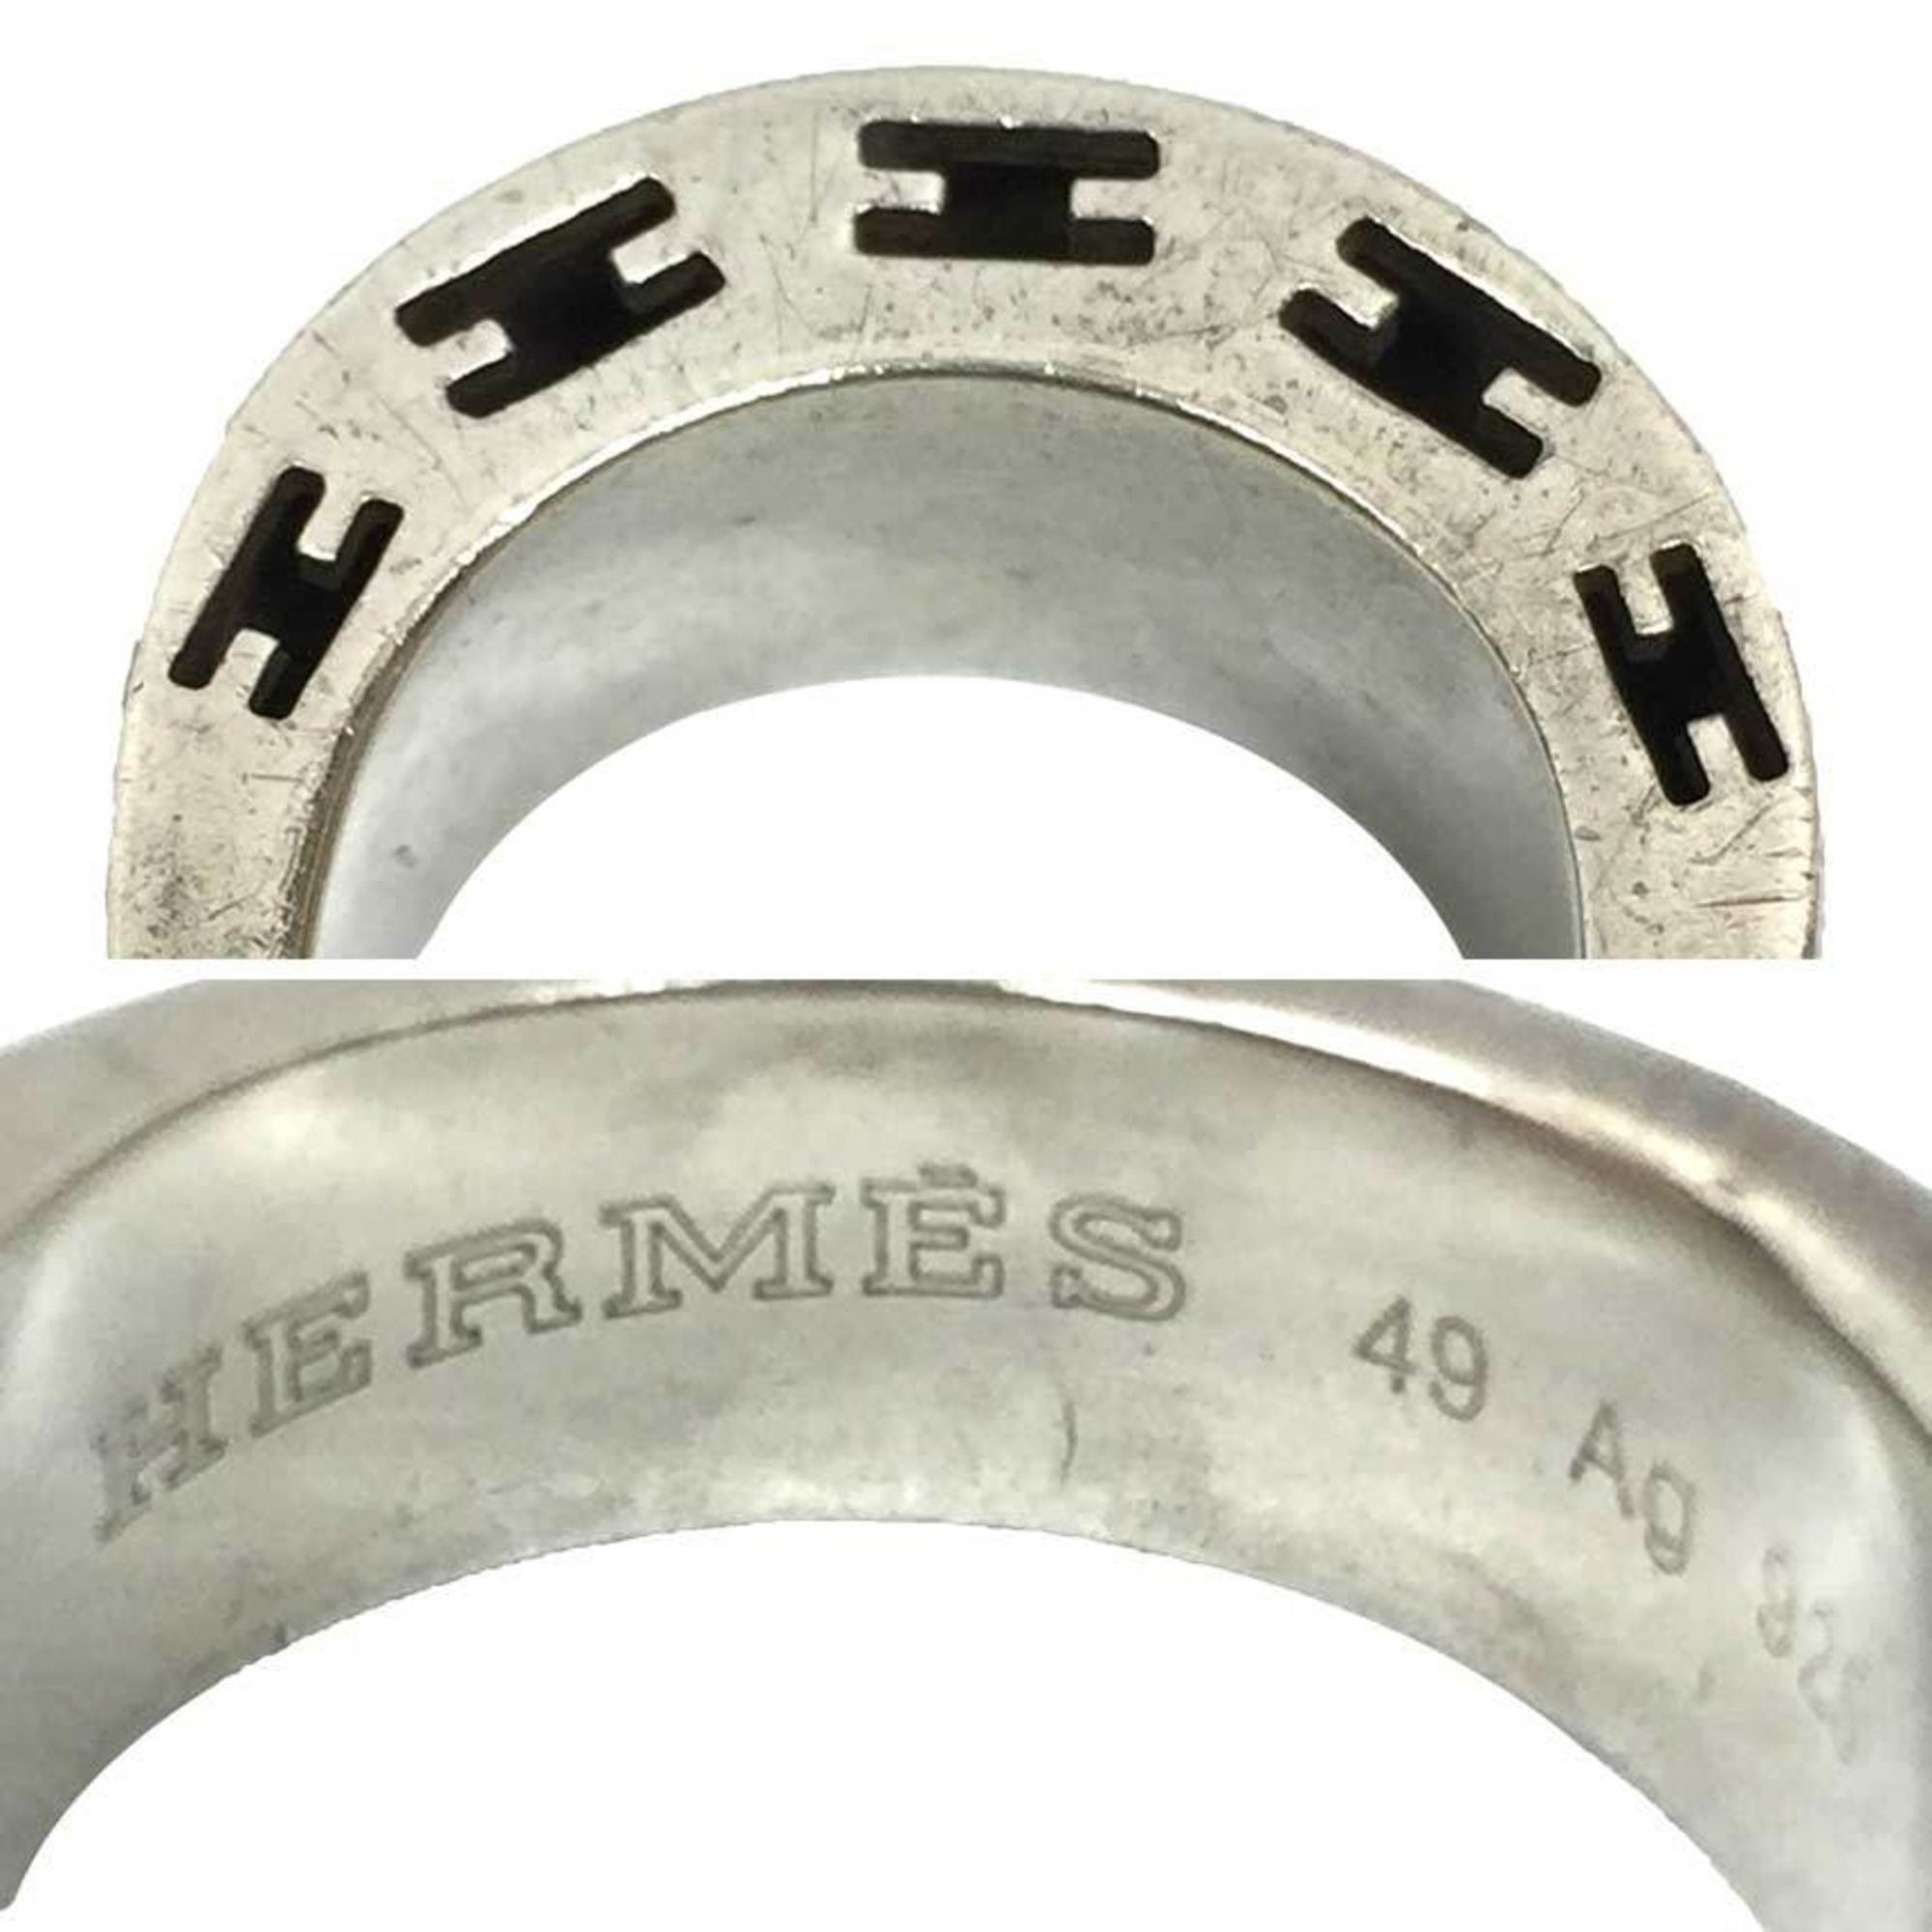 HERMES Craarte Ring AG925 Silver #49 Unisex